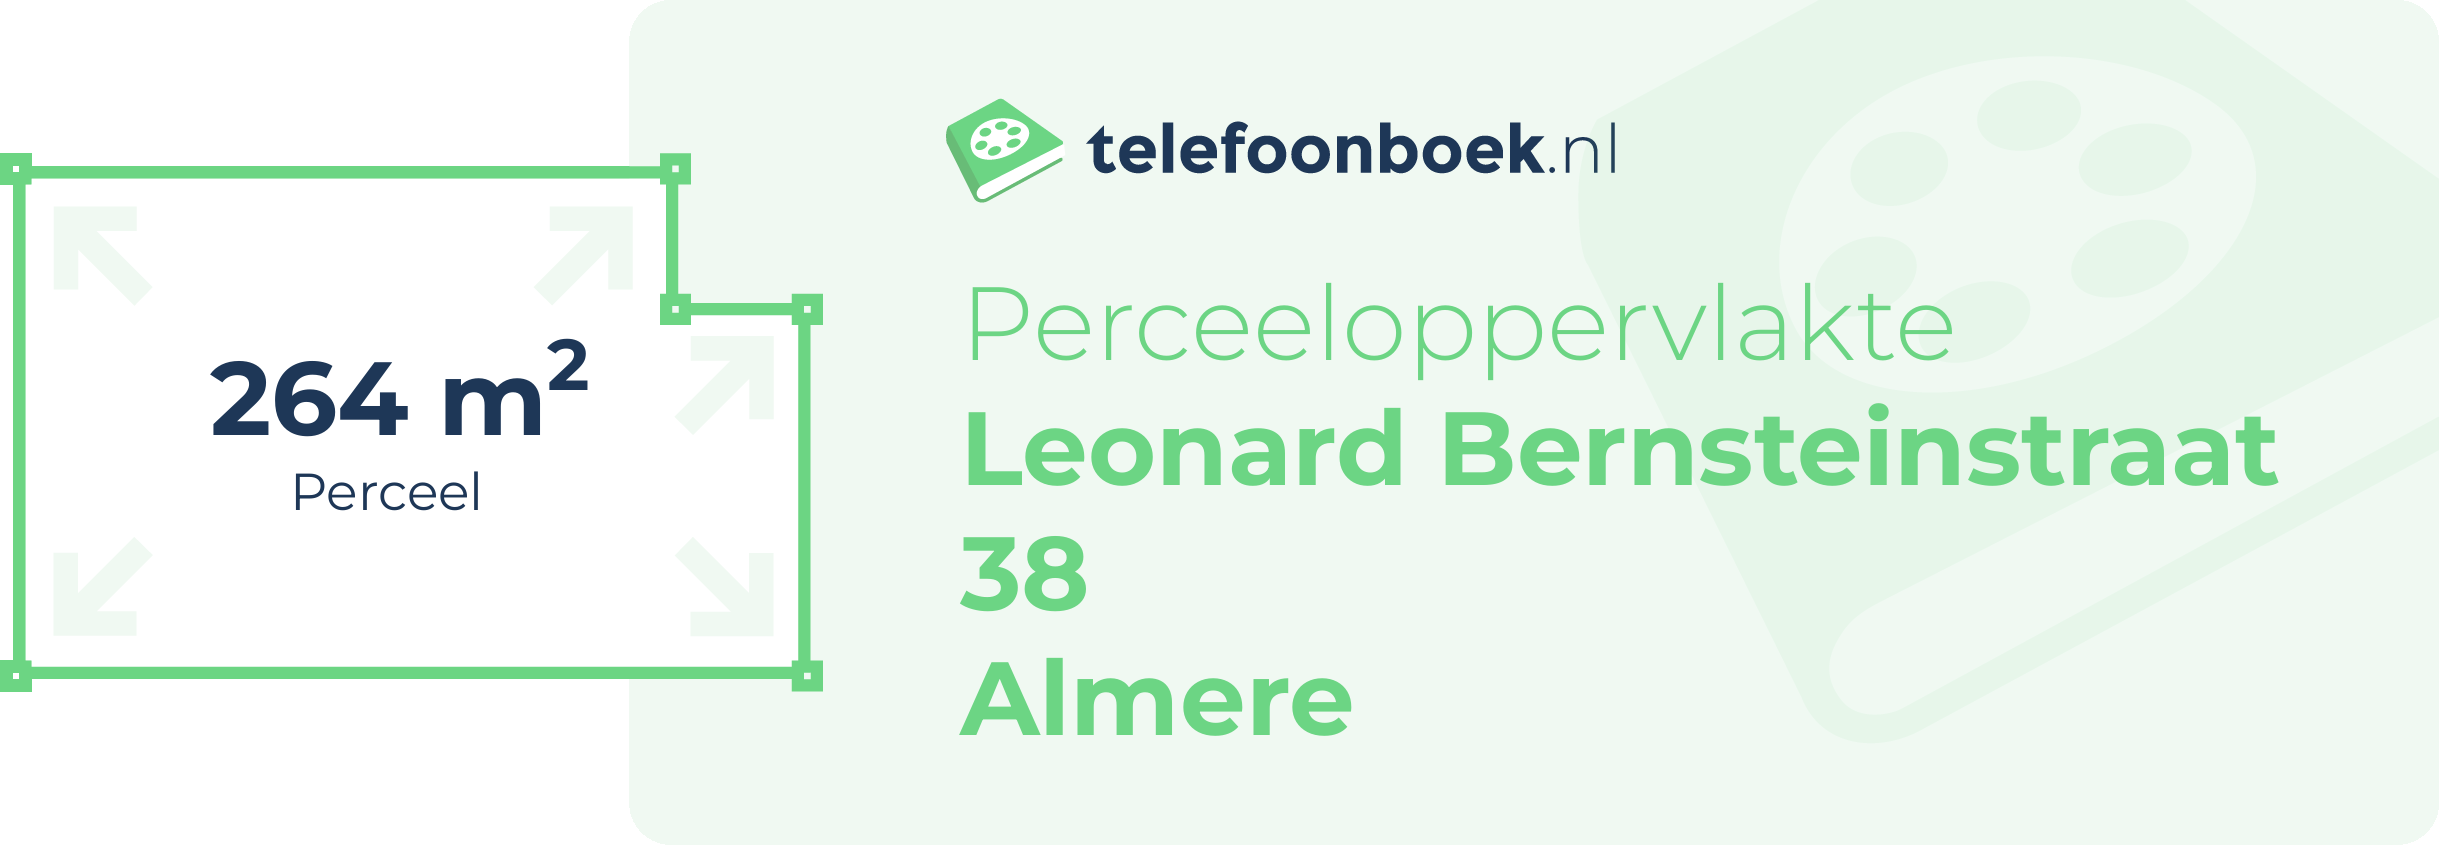 Perceeloppervlakte Leonard Bernsteinstraat 38 Almere